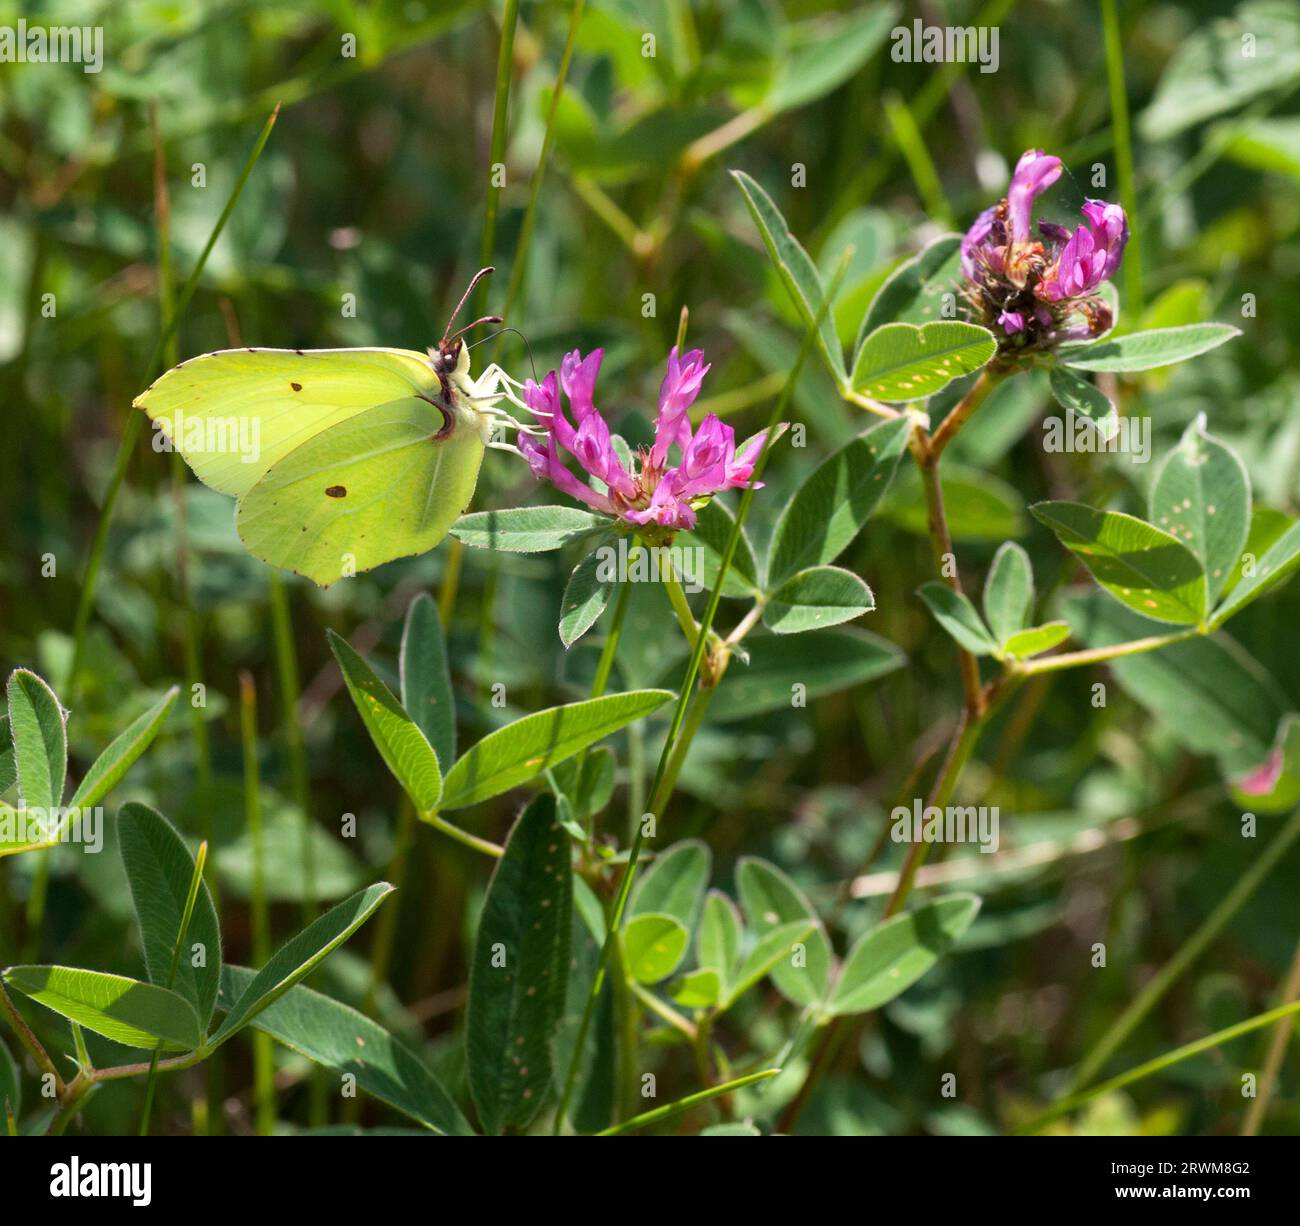 GENOPTERYX RHAMNI  the common Brimstone butterfly Stock Photo